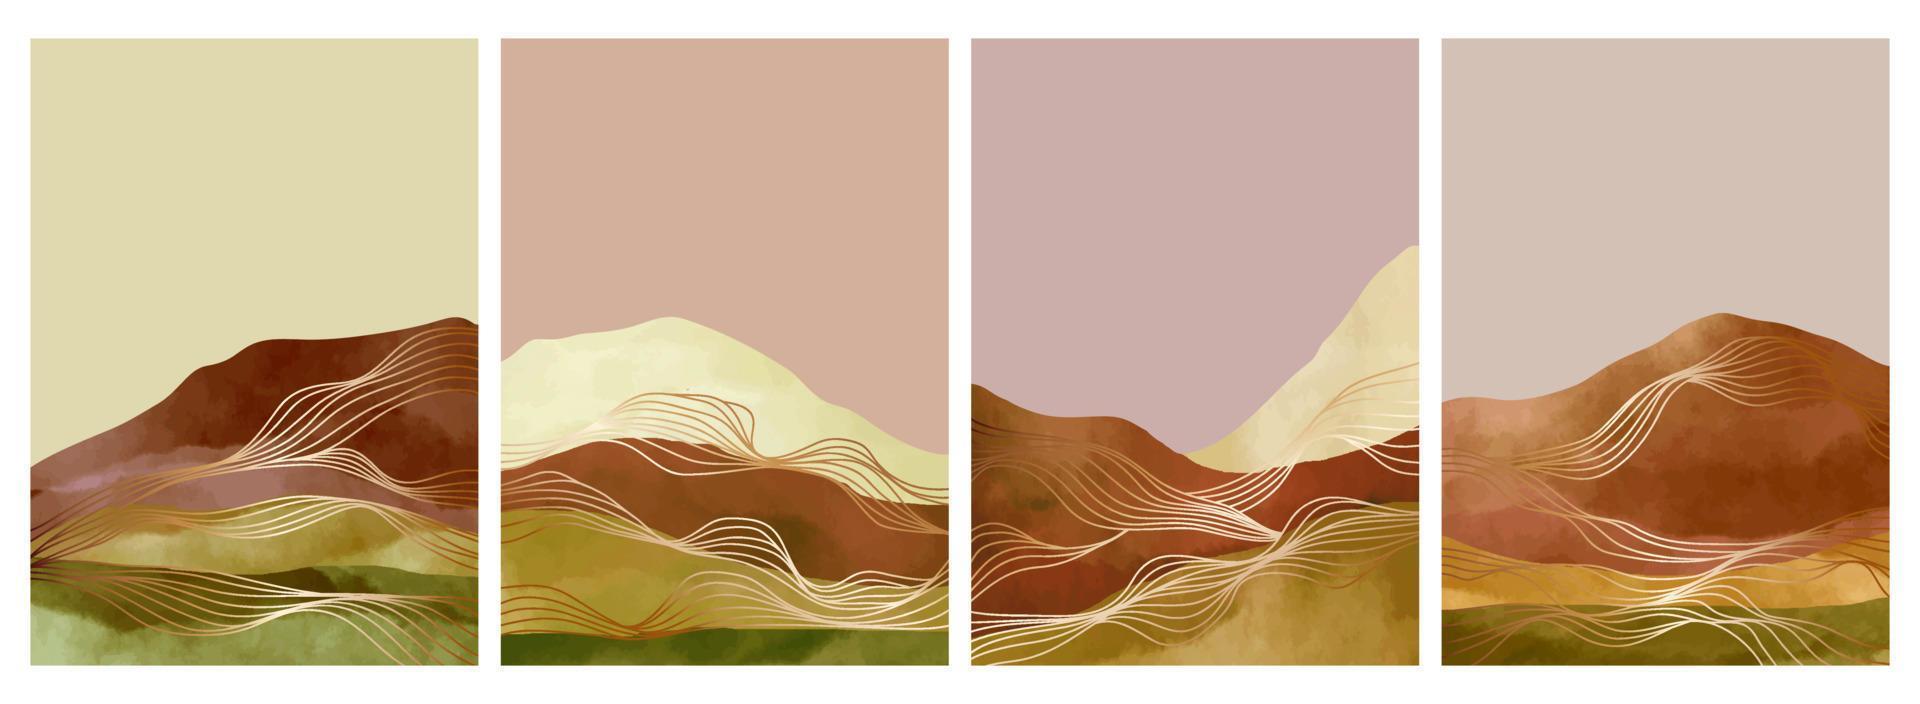 montaña paisaje acuarela pintura en colocar. resumen contemporáneo estético antecedentes paisaje. con montañas, sierras, bosque, horizonte. vector ilustración